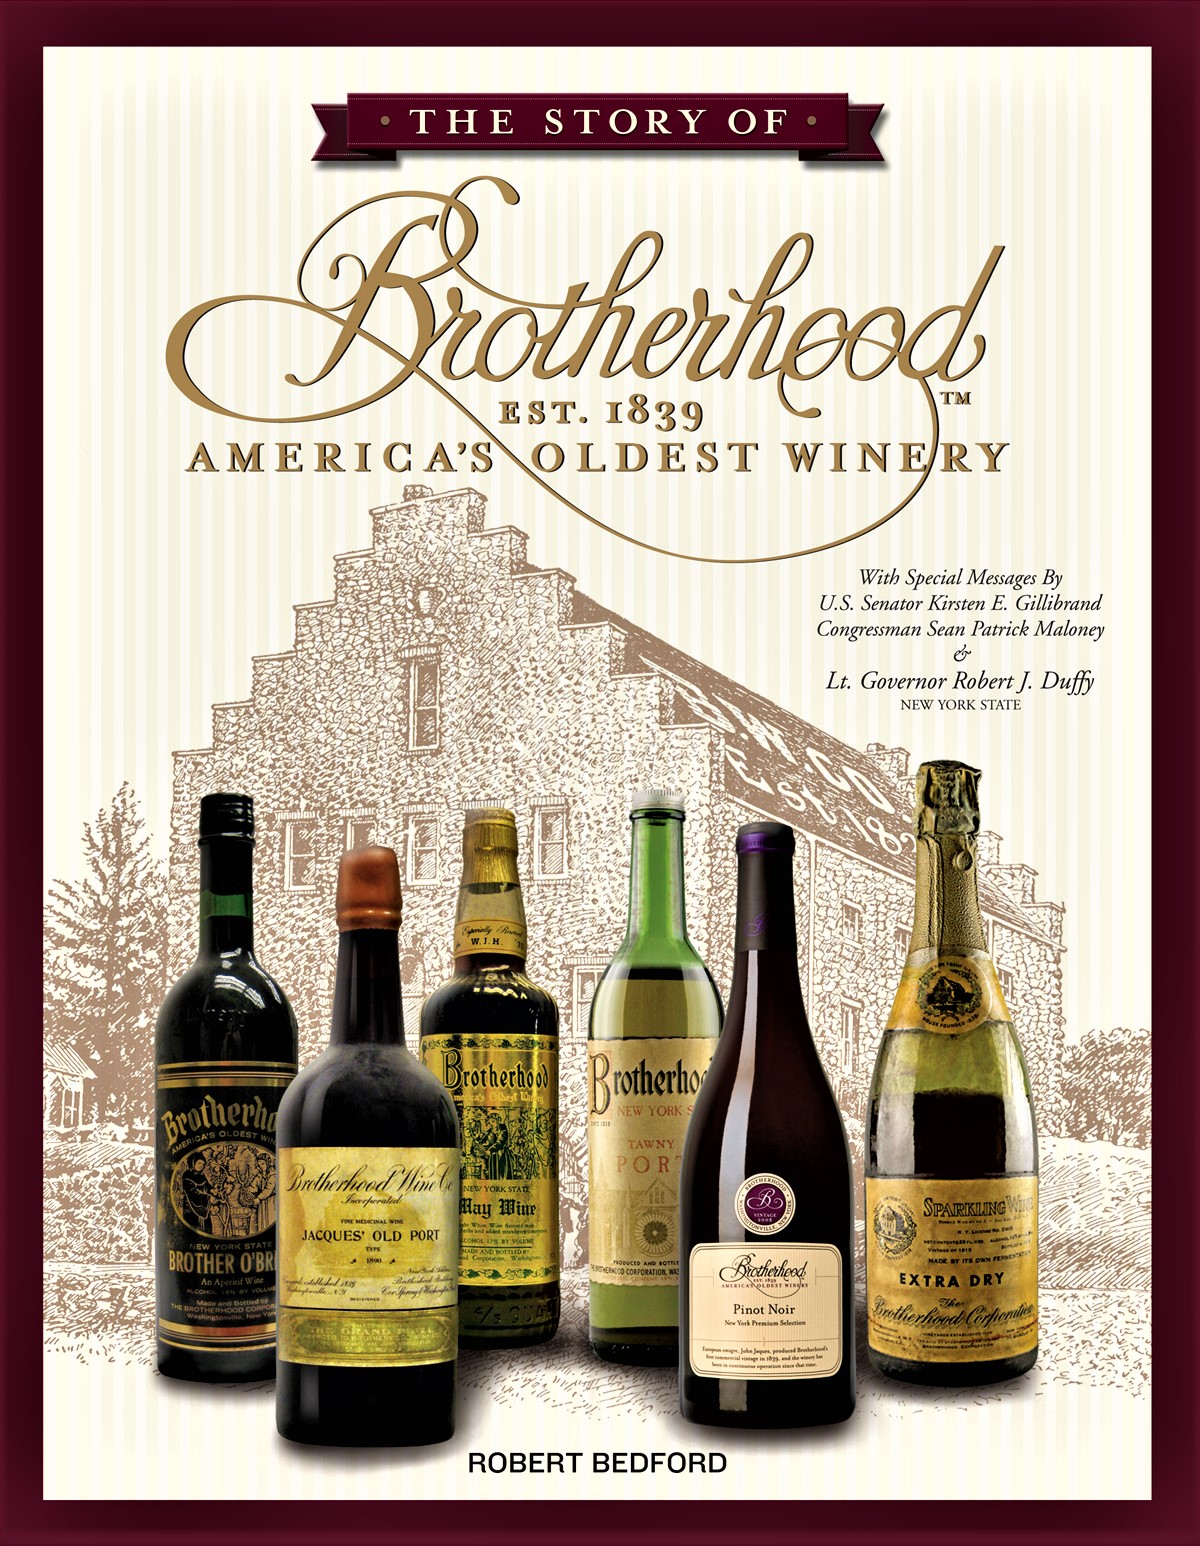 Brotherhood winery booklet ny wine 4-21 cropped.jpg